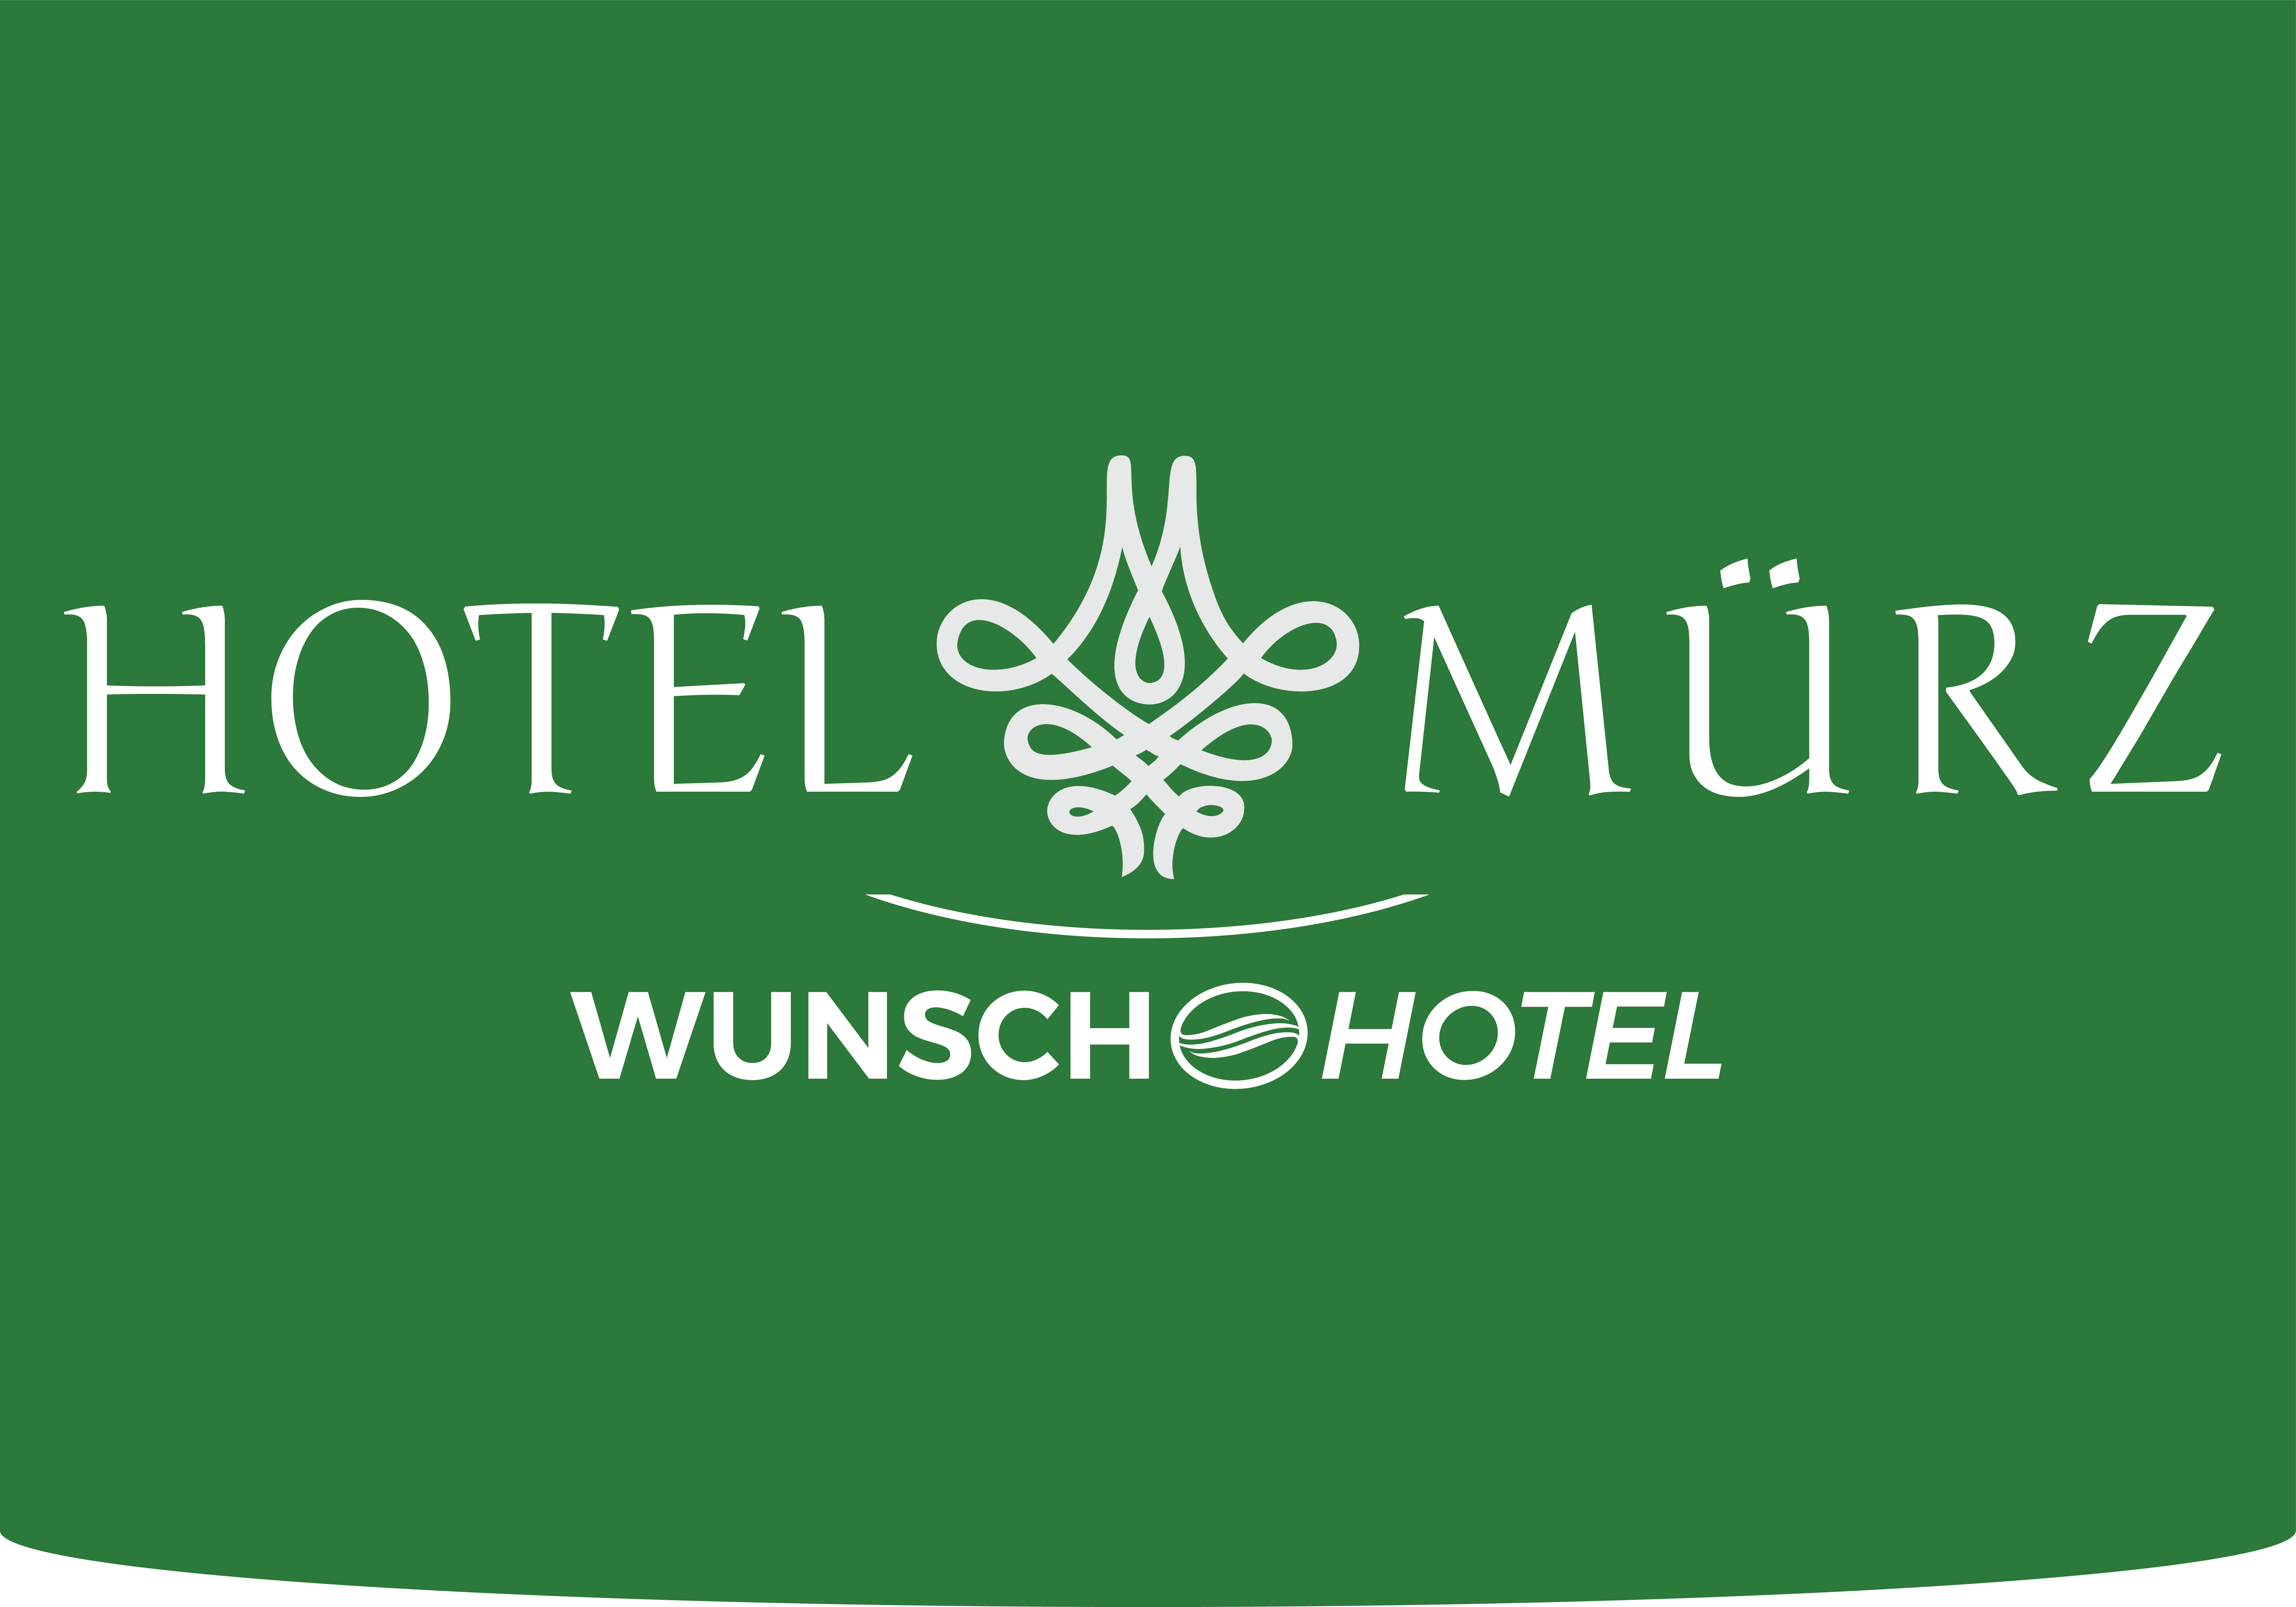 Wunsch Hotel Mürz